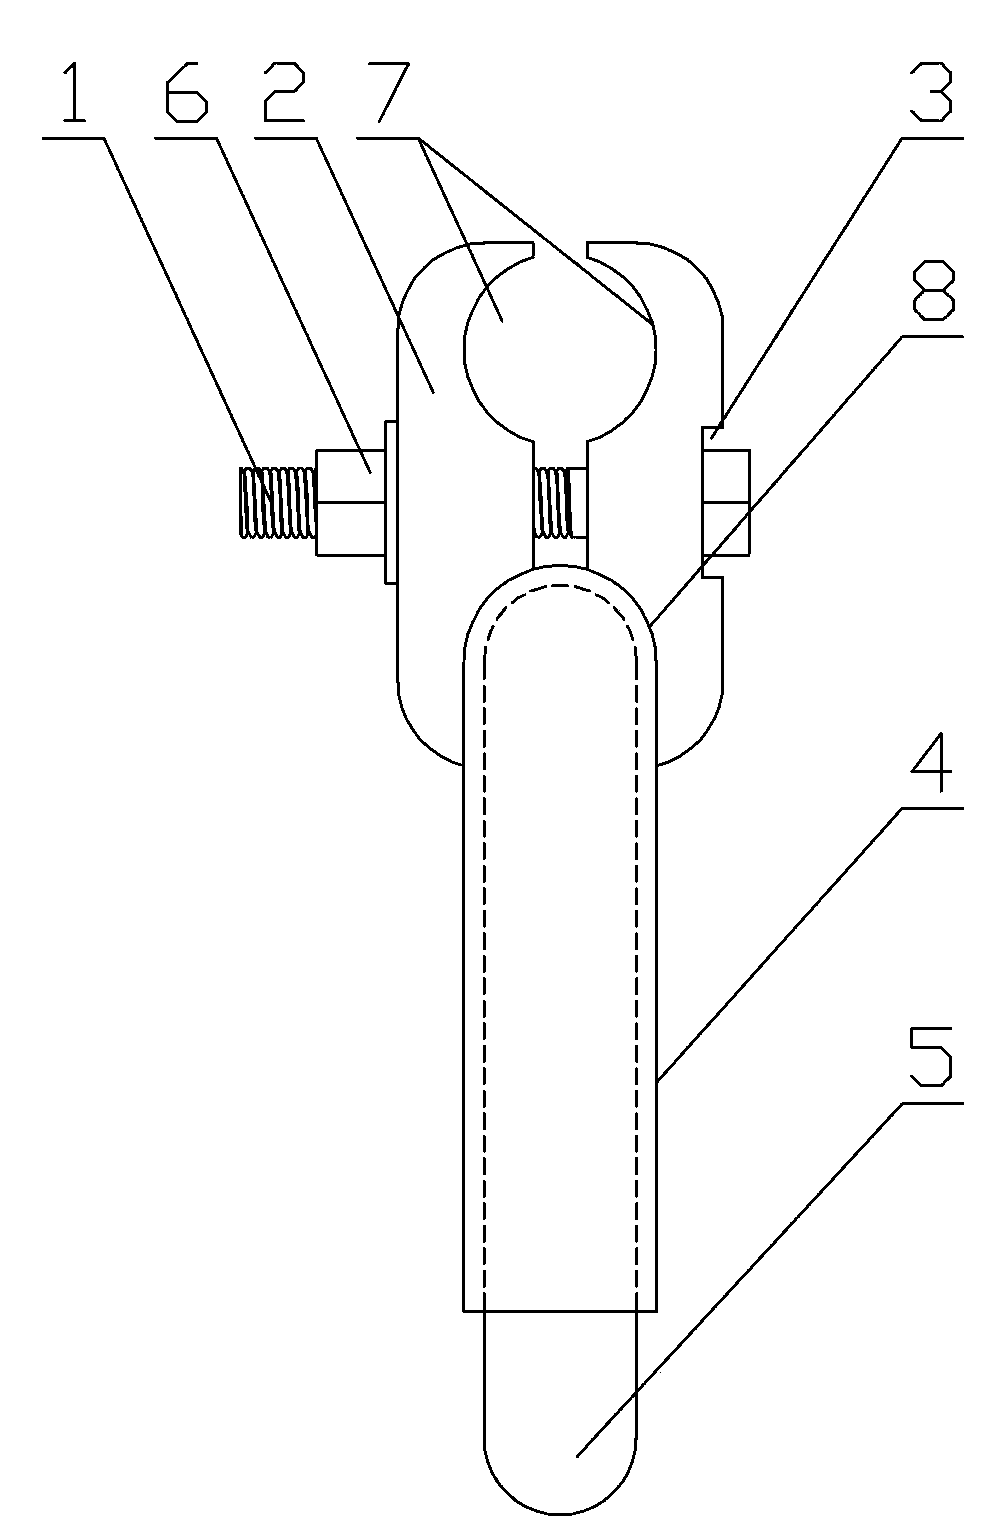 Fixed-type grounding hook device